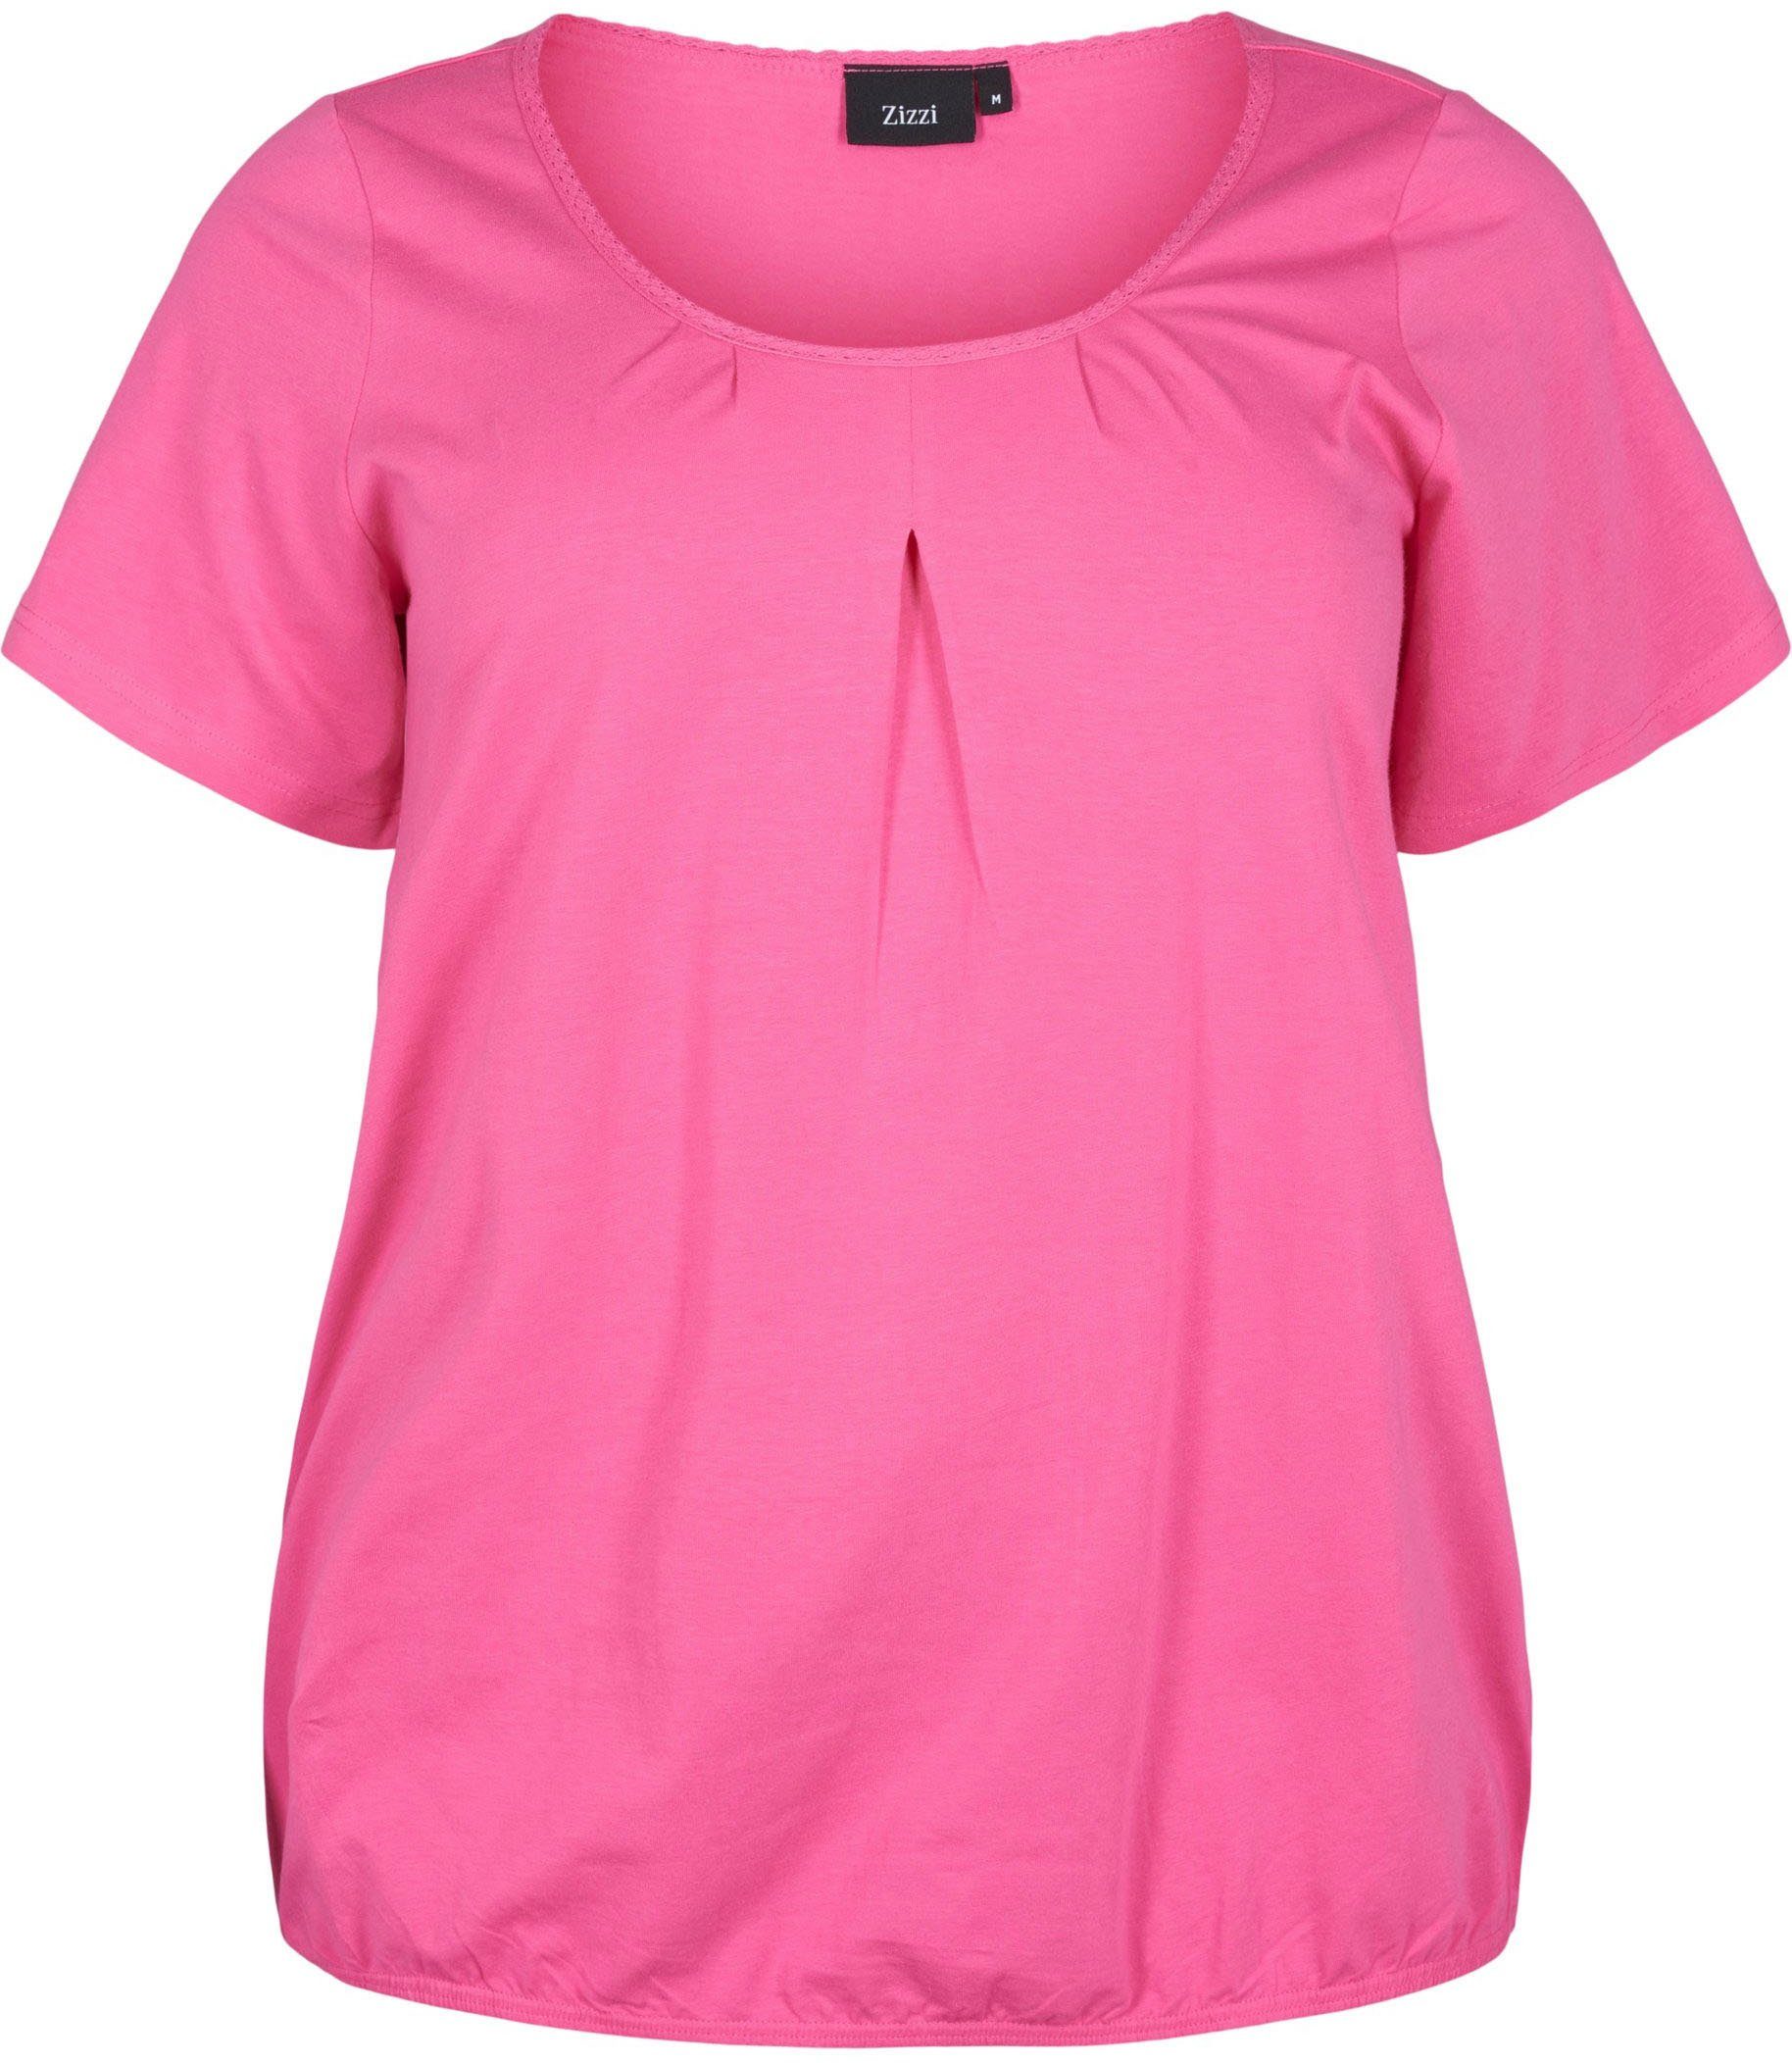 Outlet-Store Zizzi T-Shirt Shocking Pink Zizzi VPOLLY